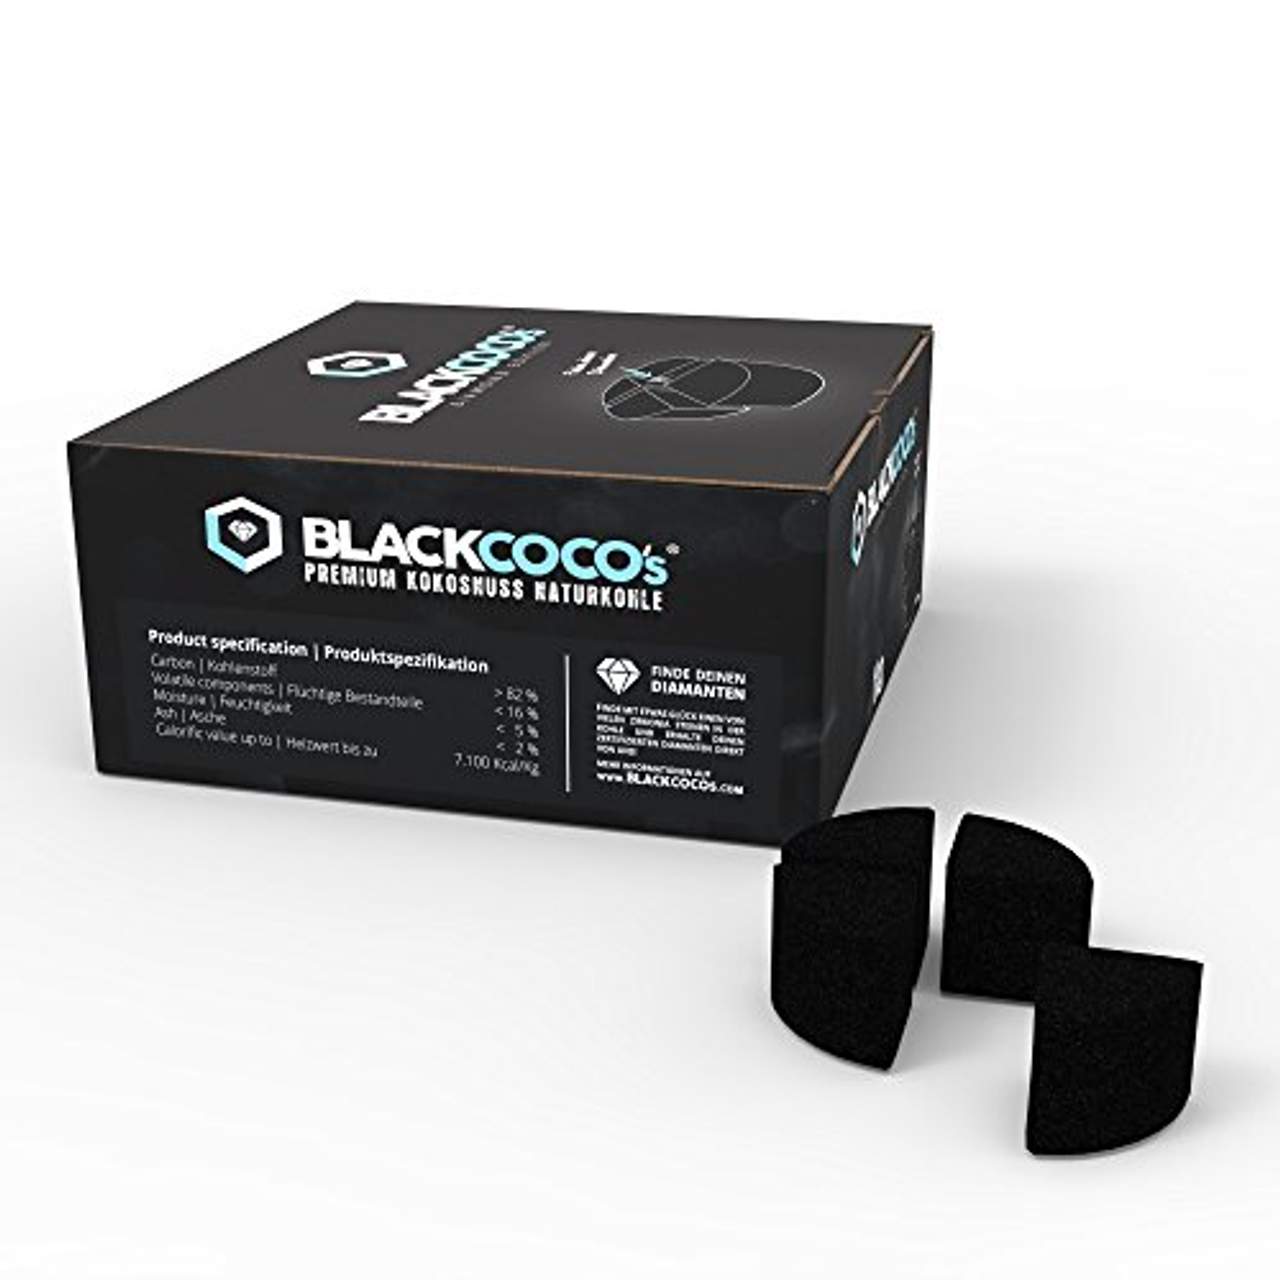 BLACKCOCO‘s 1KG Diamond Edition